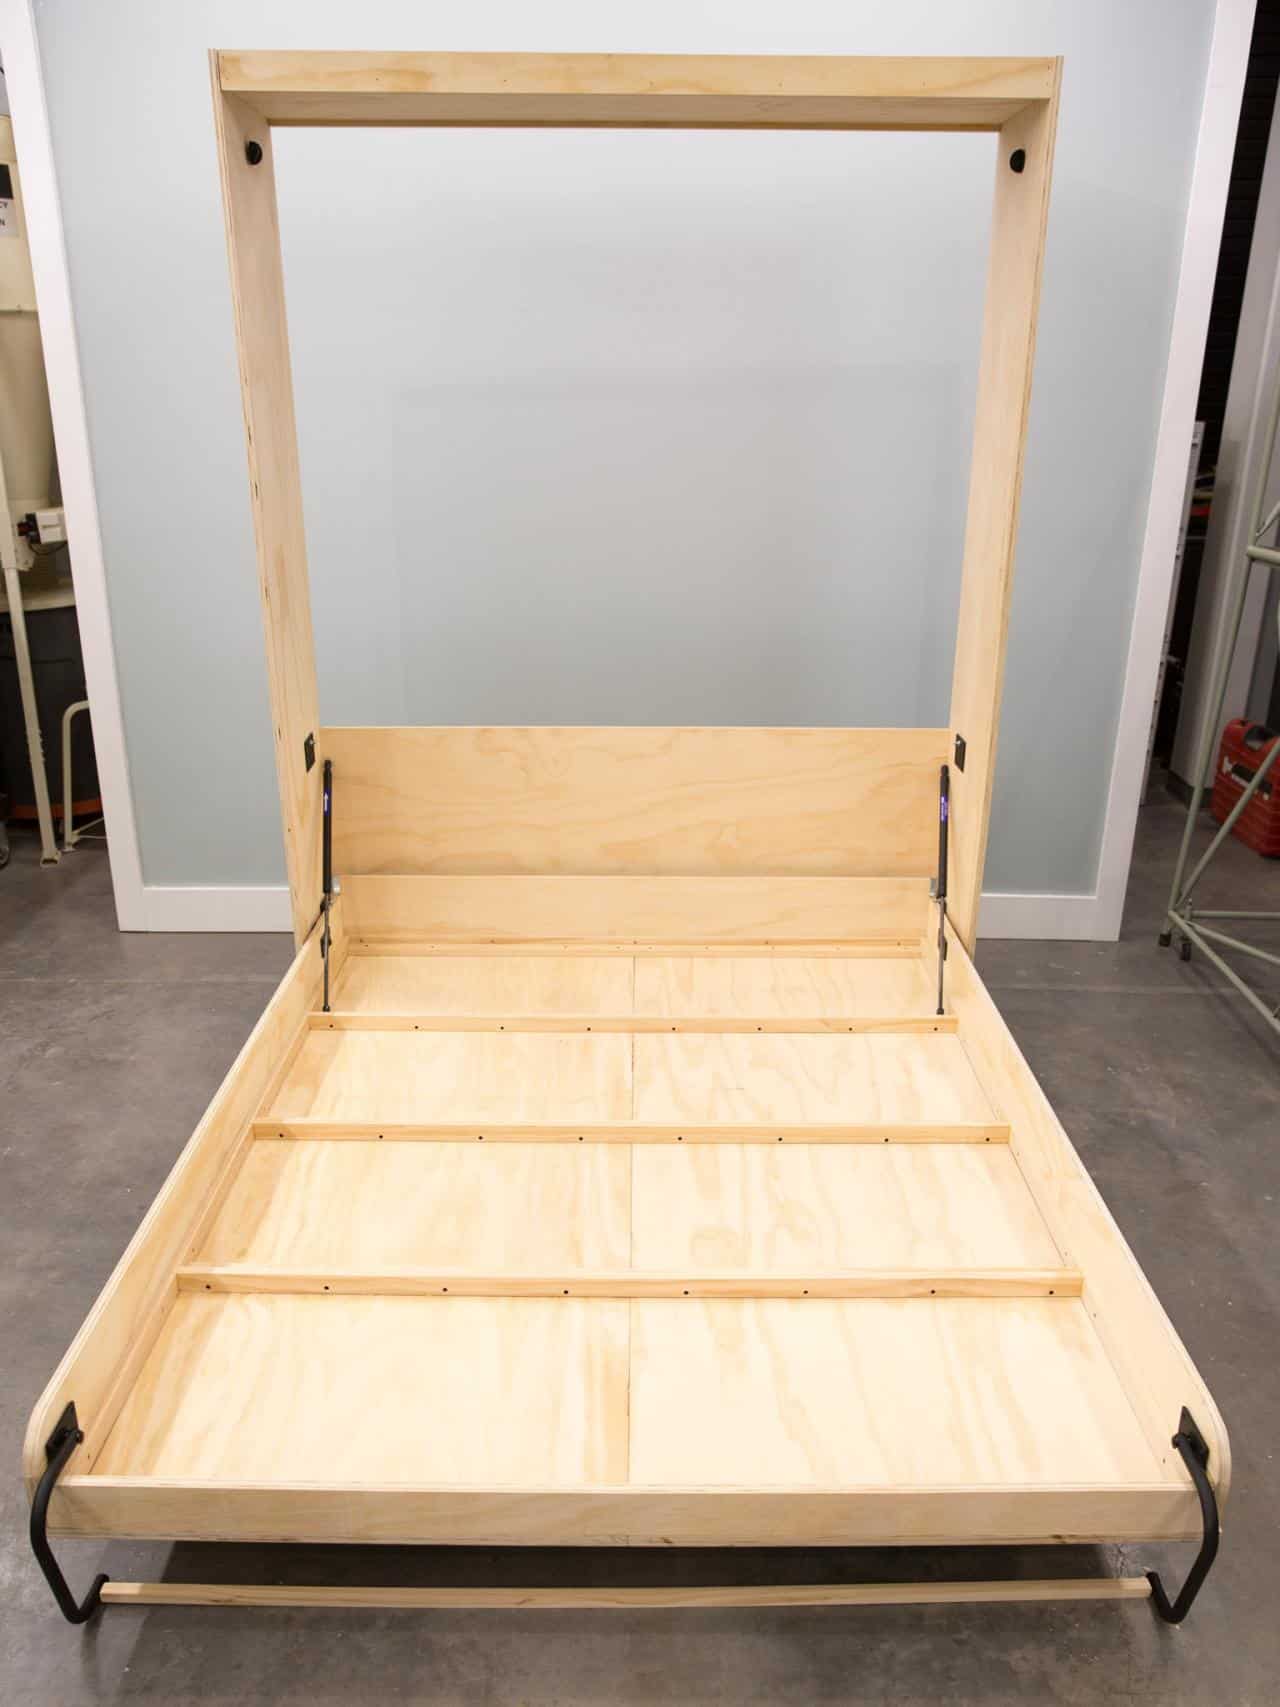 Simple diy wooden murphy bed